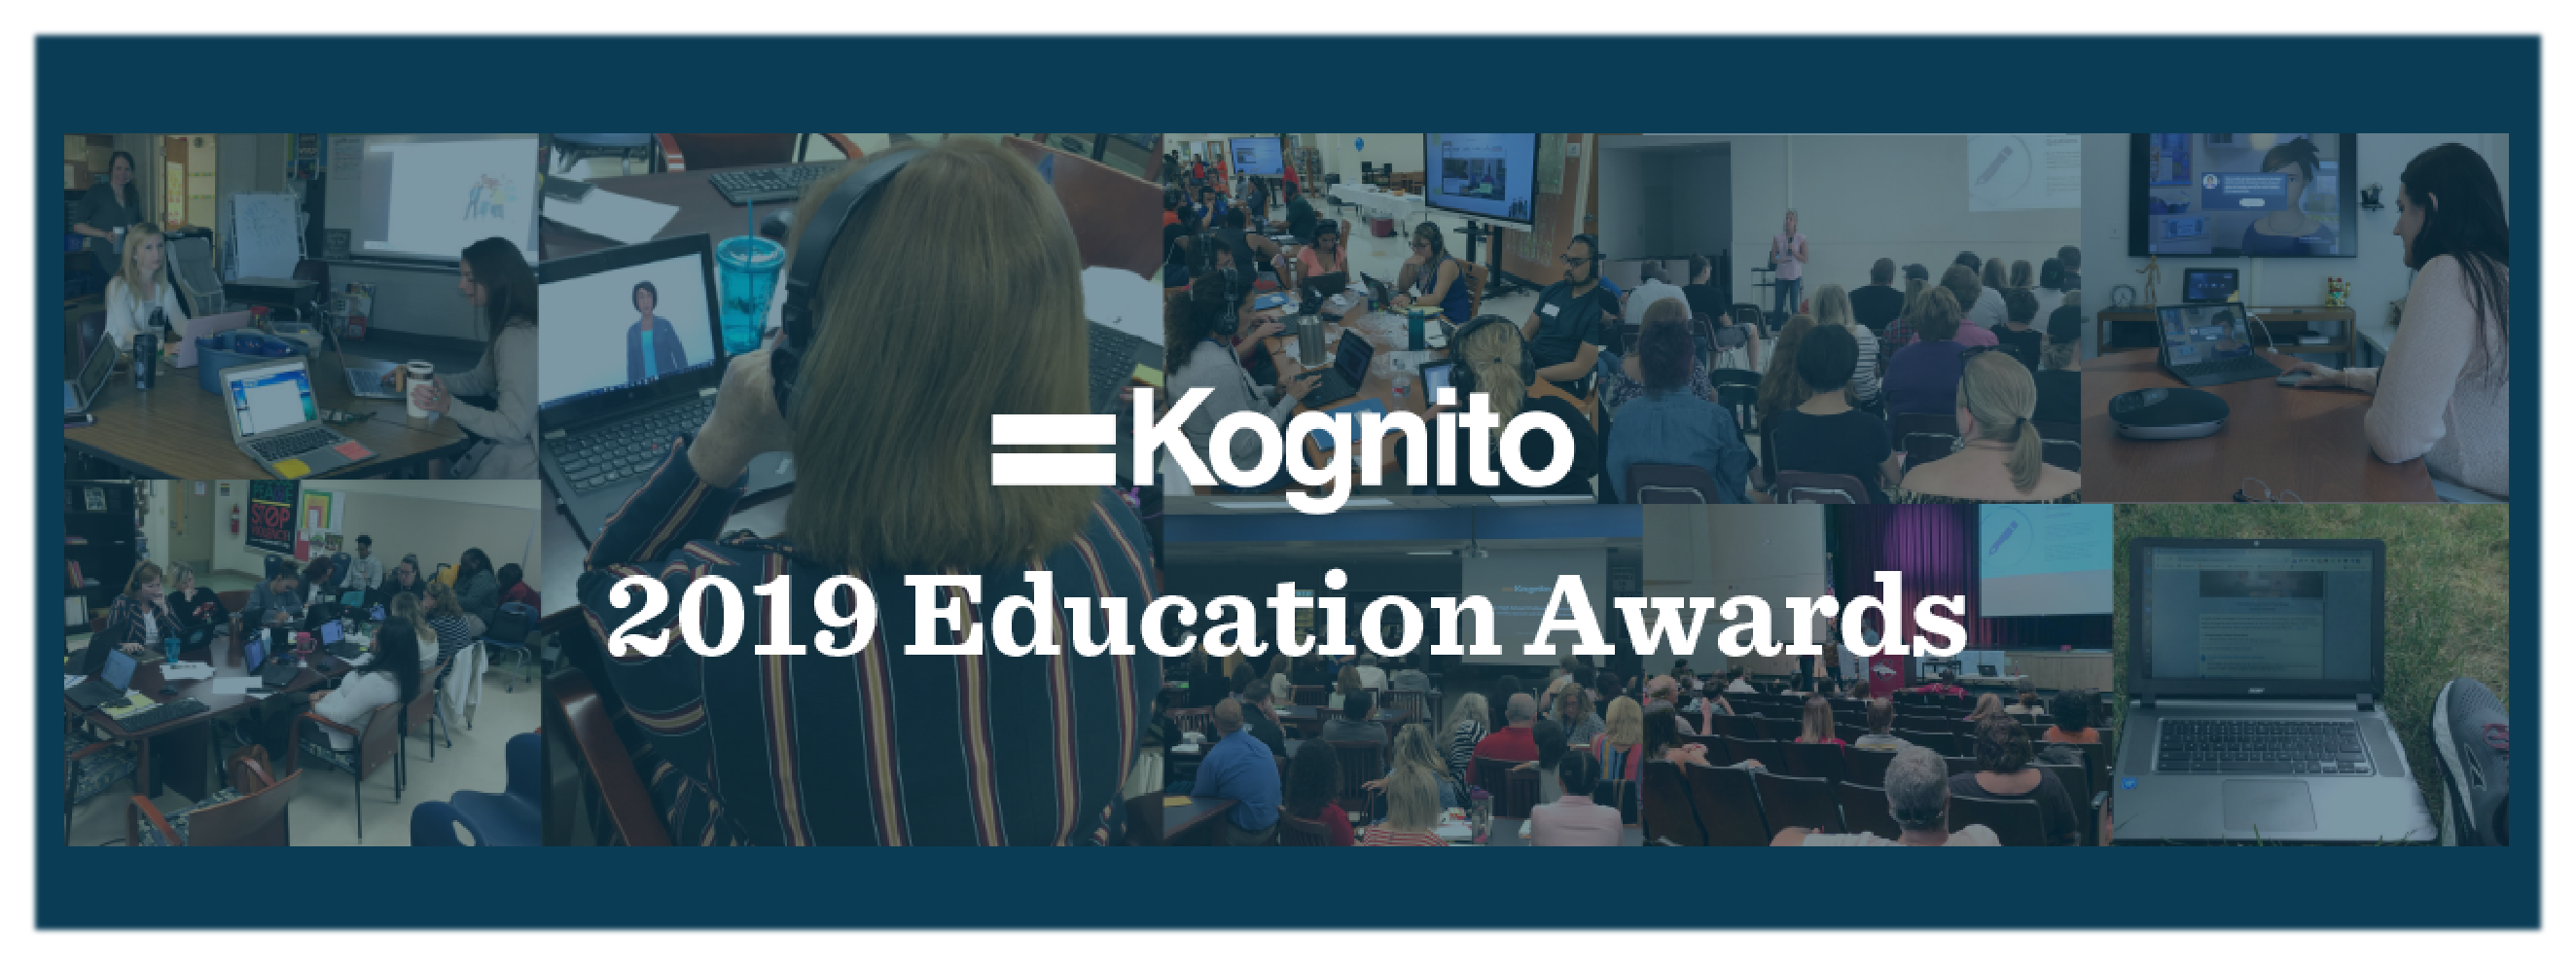 2019 Kognito Education Awards